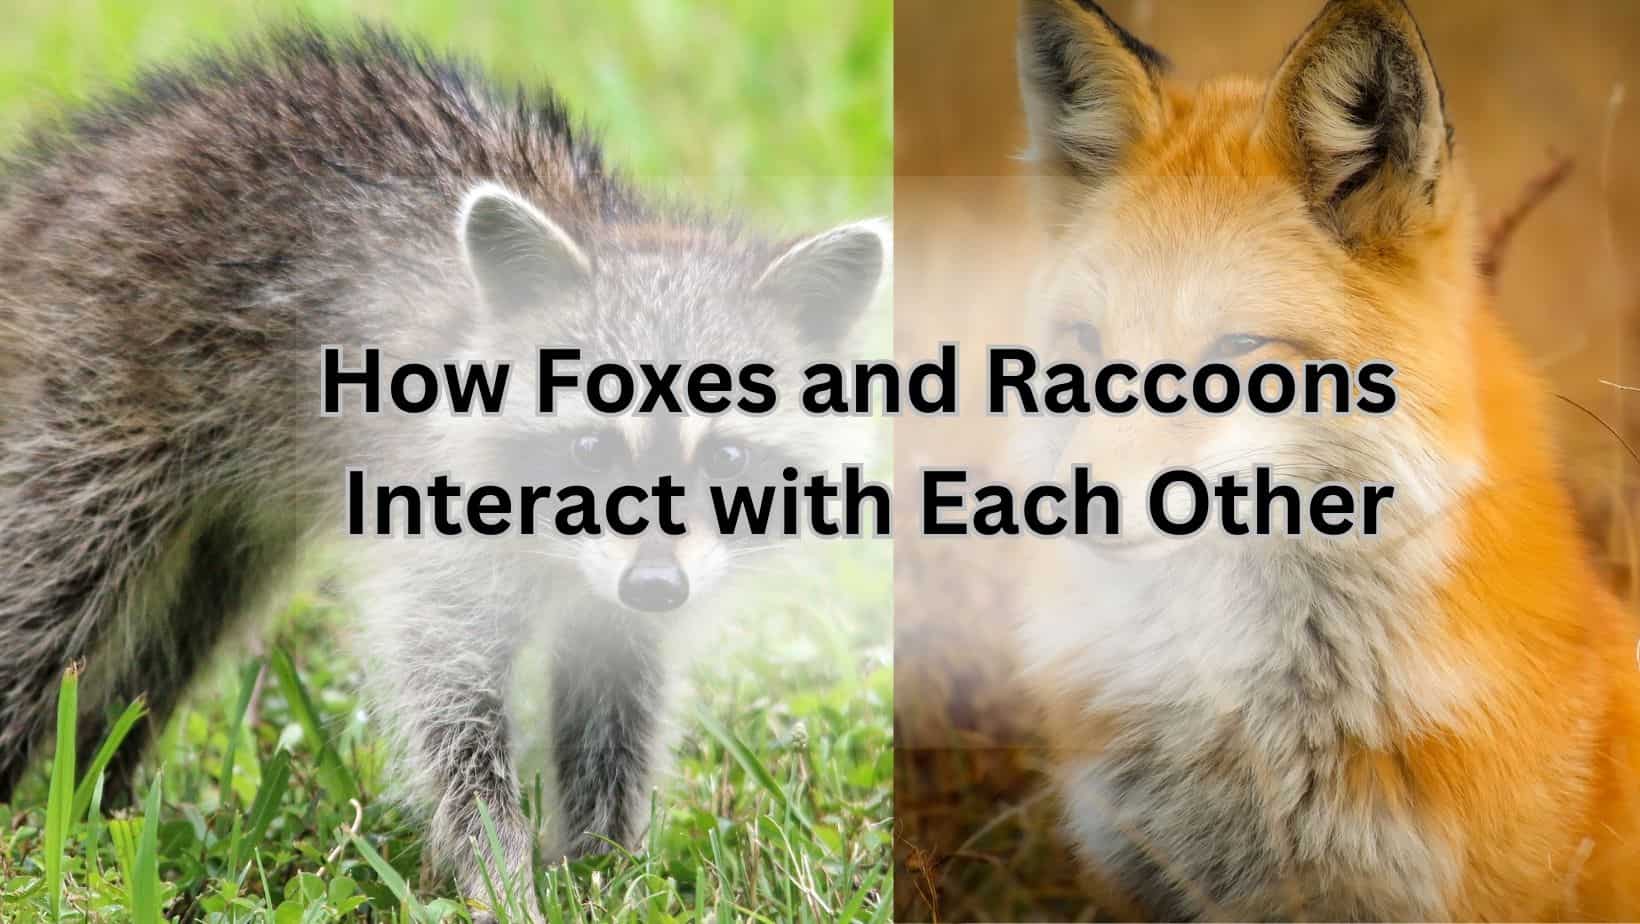 Fox and raccoons